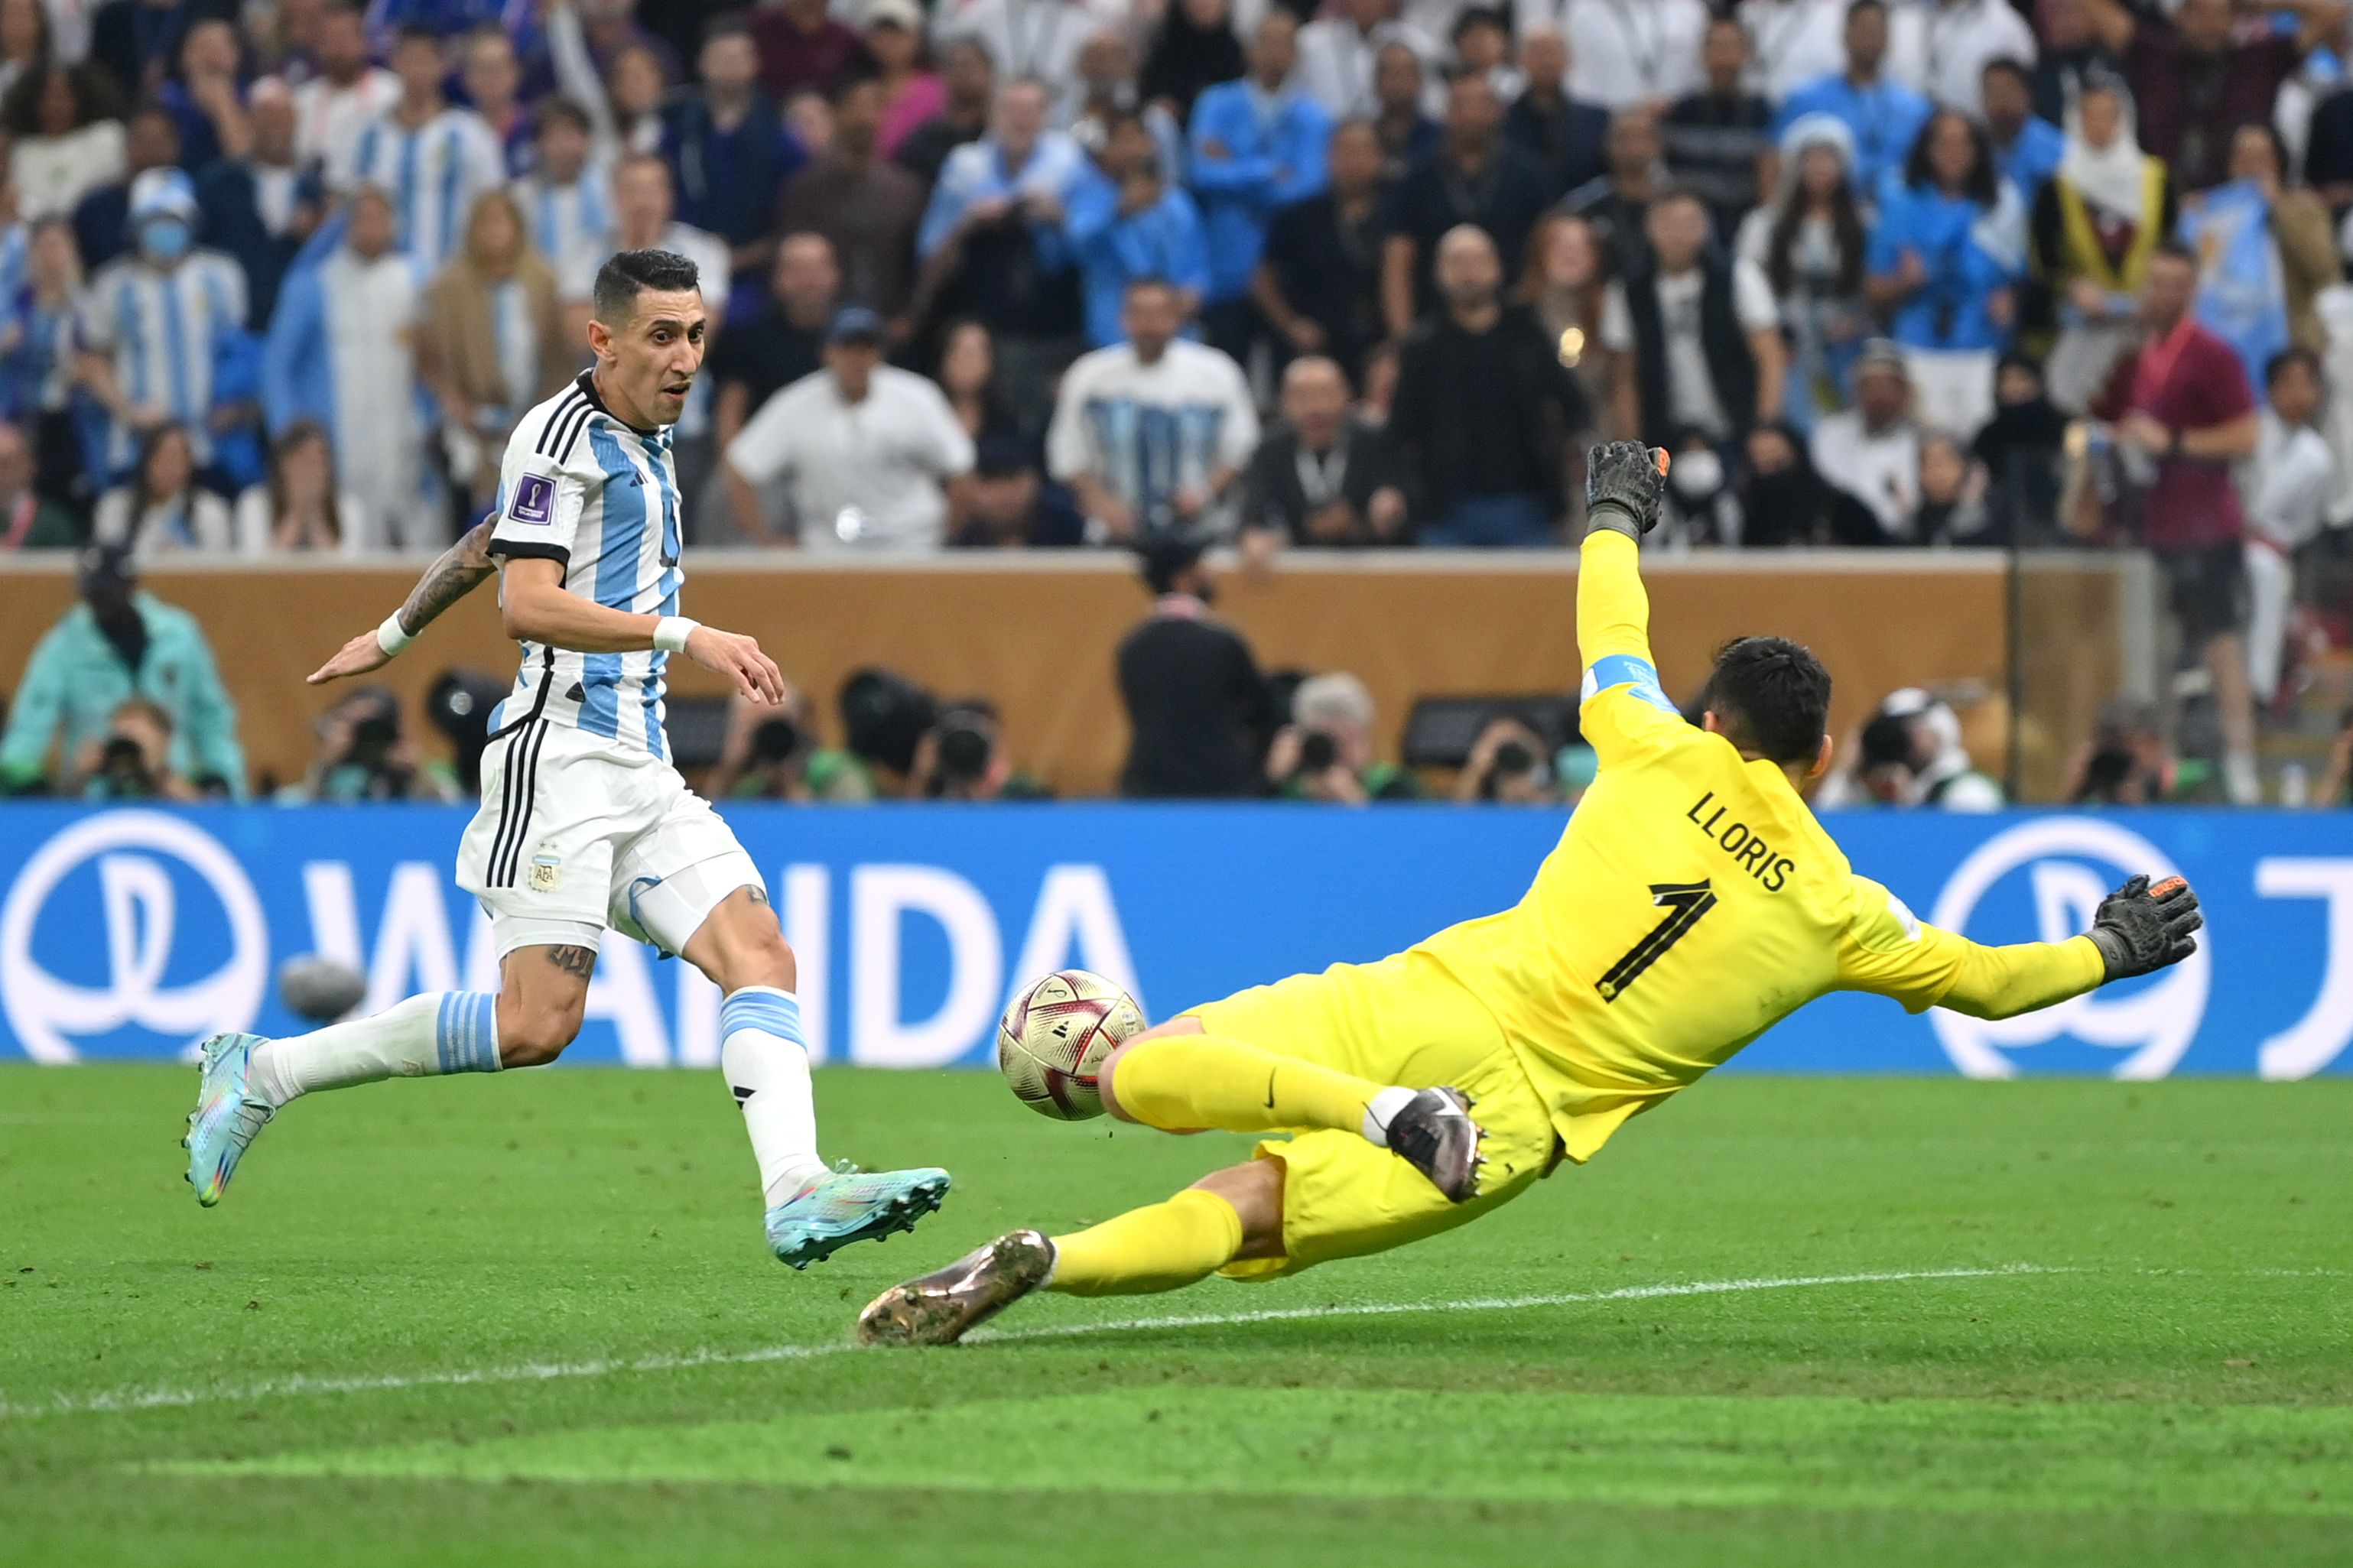 Ronaldo bicycle kick Juventus vs Real Madrid 0-3 H on Make a GIF